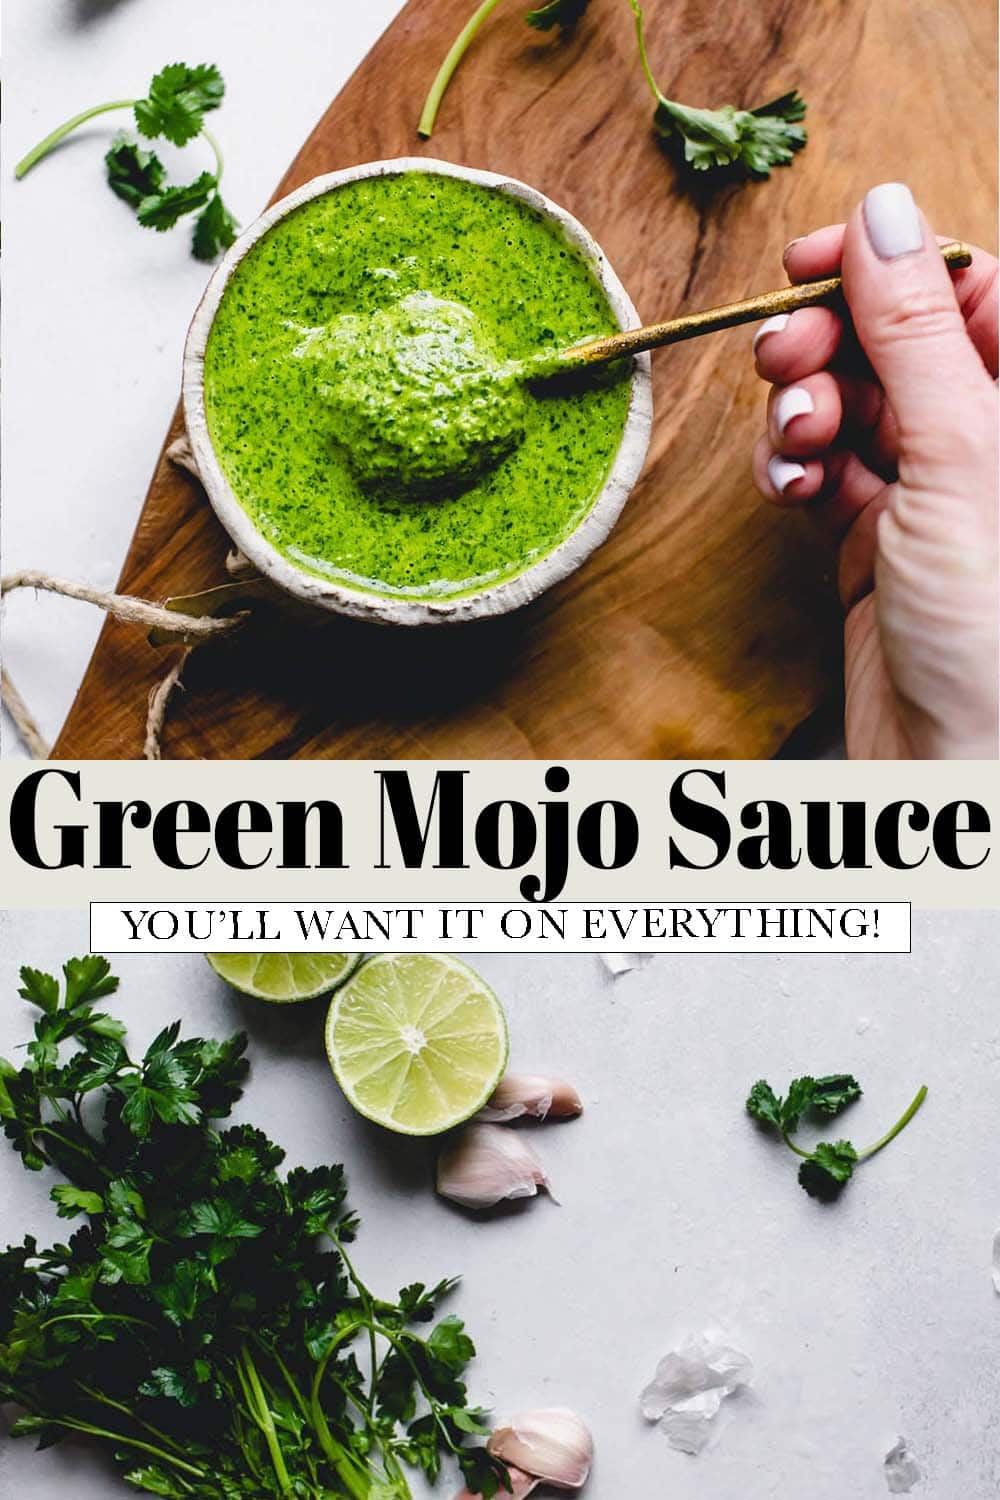 Green Mojo Sauce